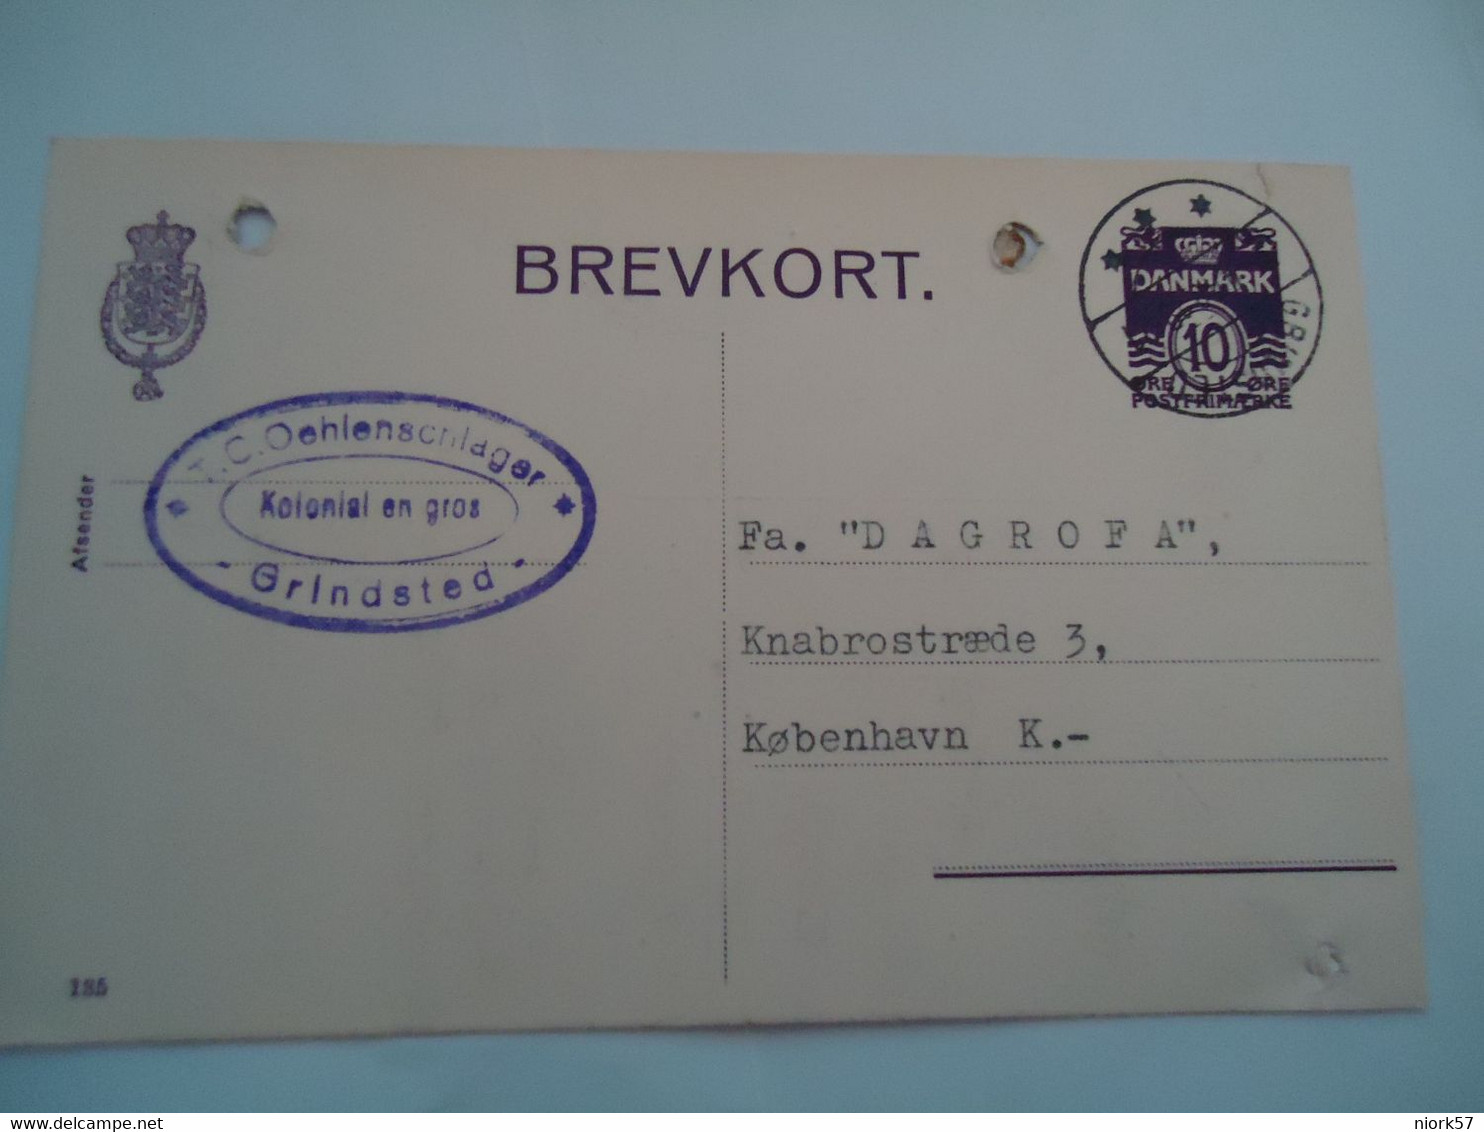 DENMARK BREVKORT  1940  GRINDSTED  2 SCAN - Maximum Cards & Covers